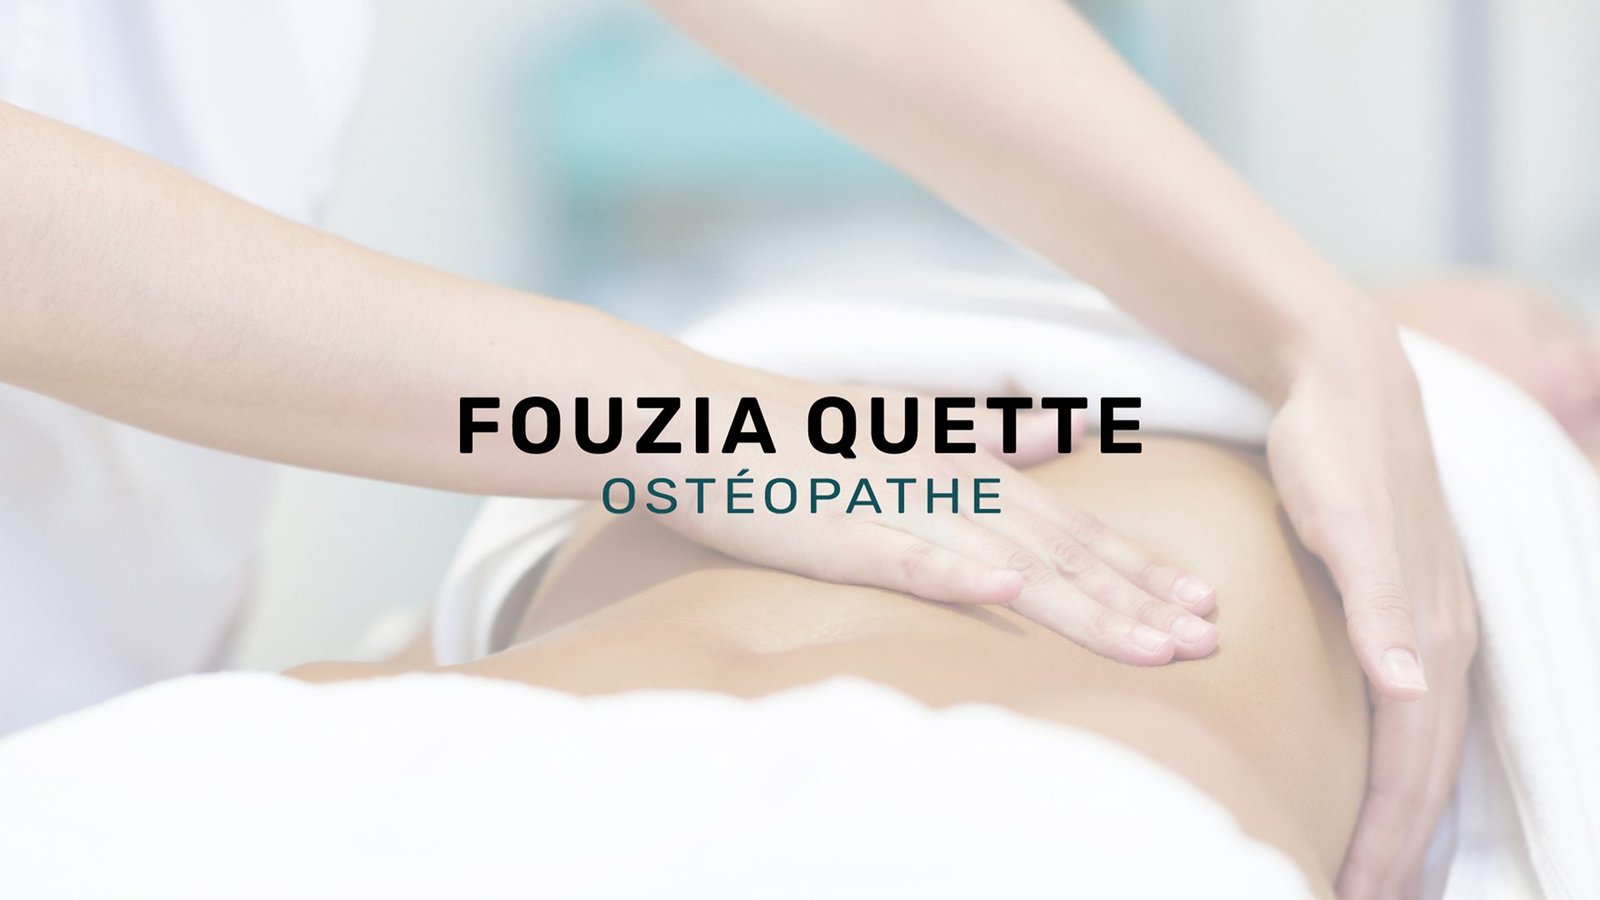 Fouziaquette-osteopathe - 1